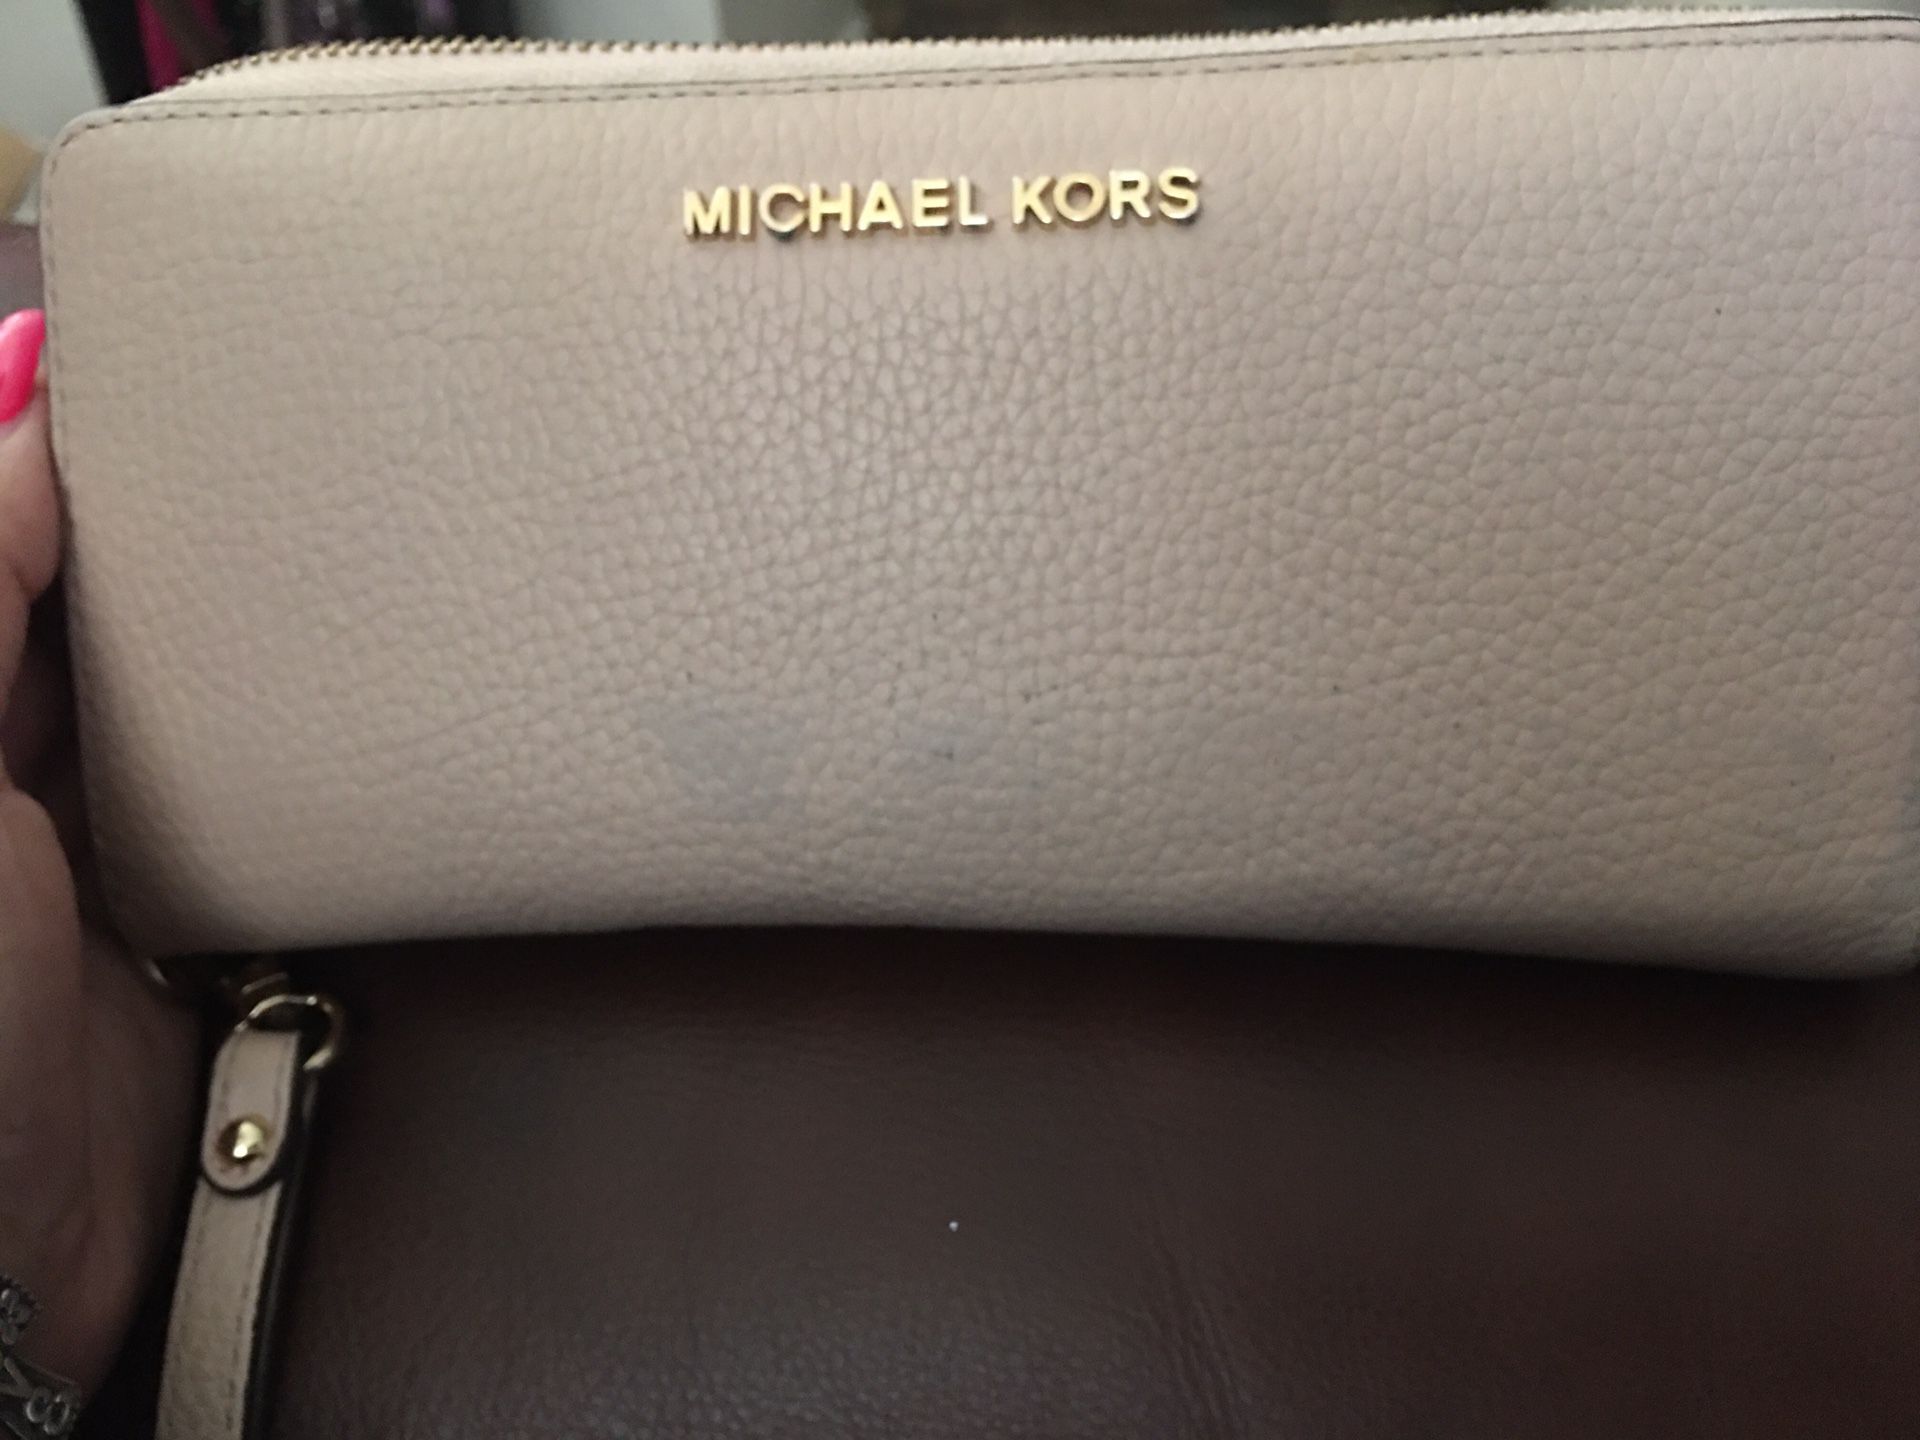 Michael kors wristlet wallet light pink